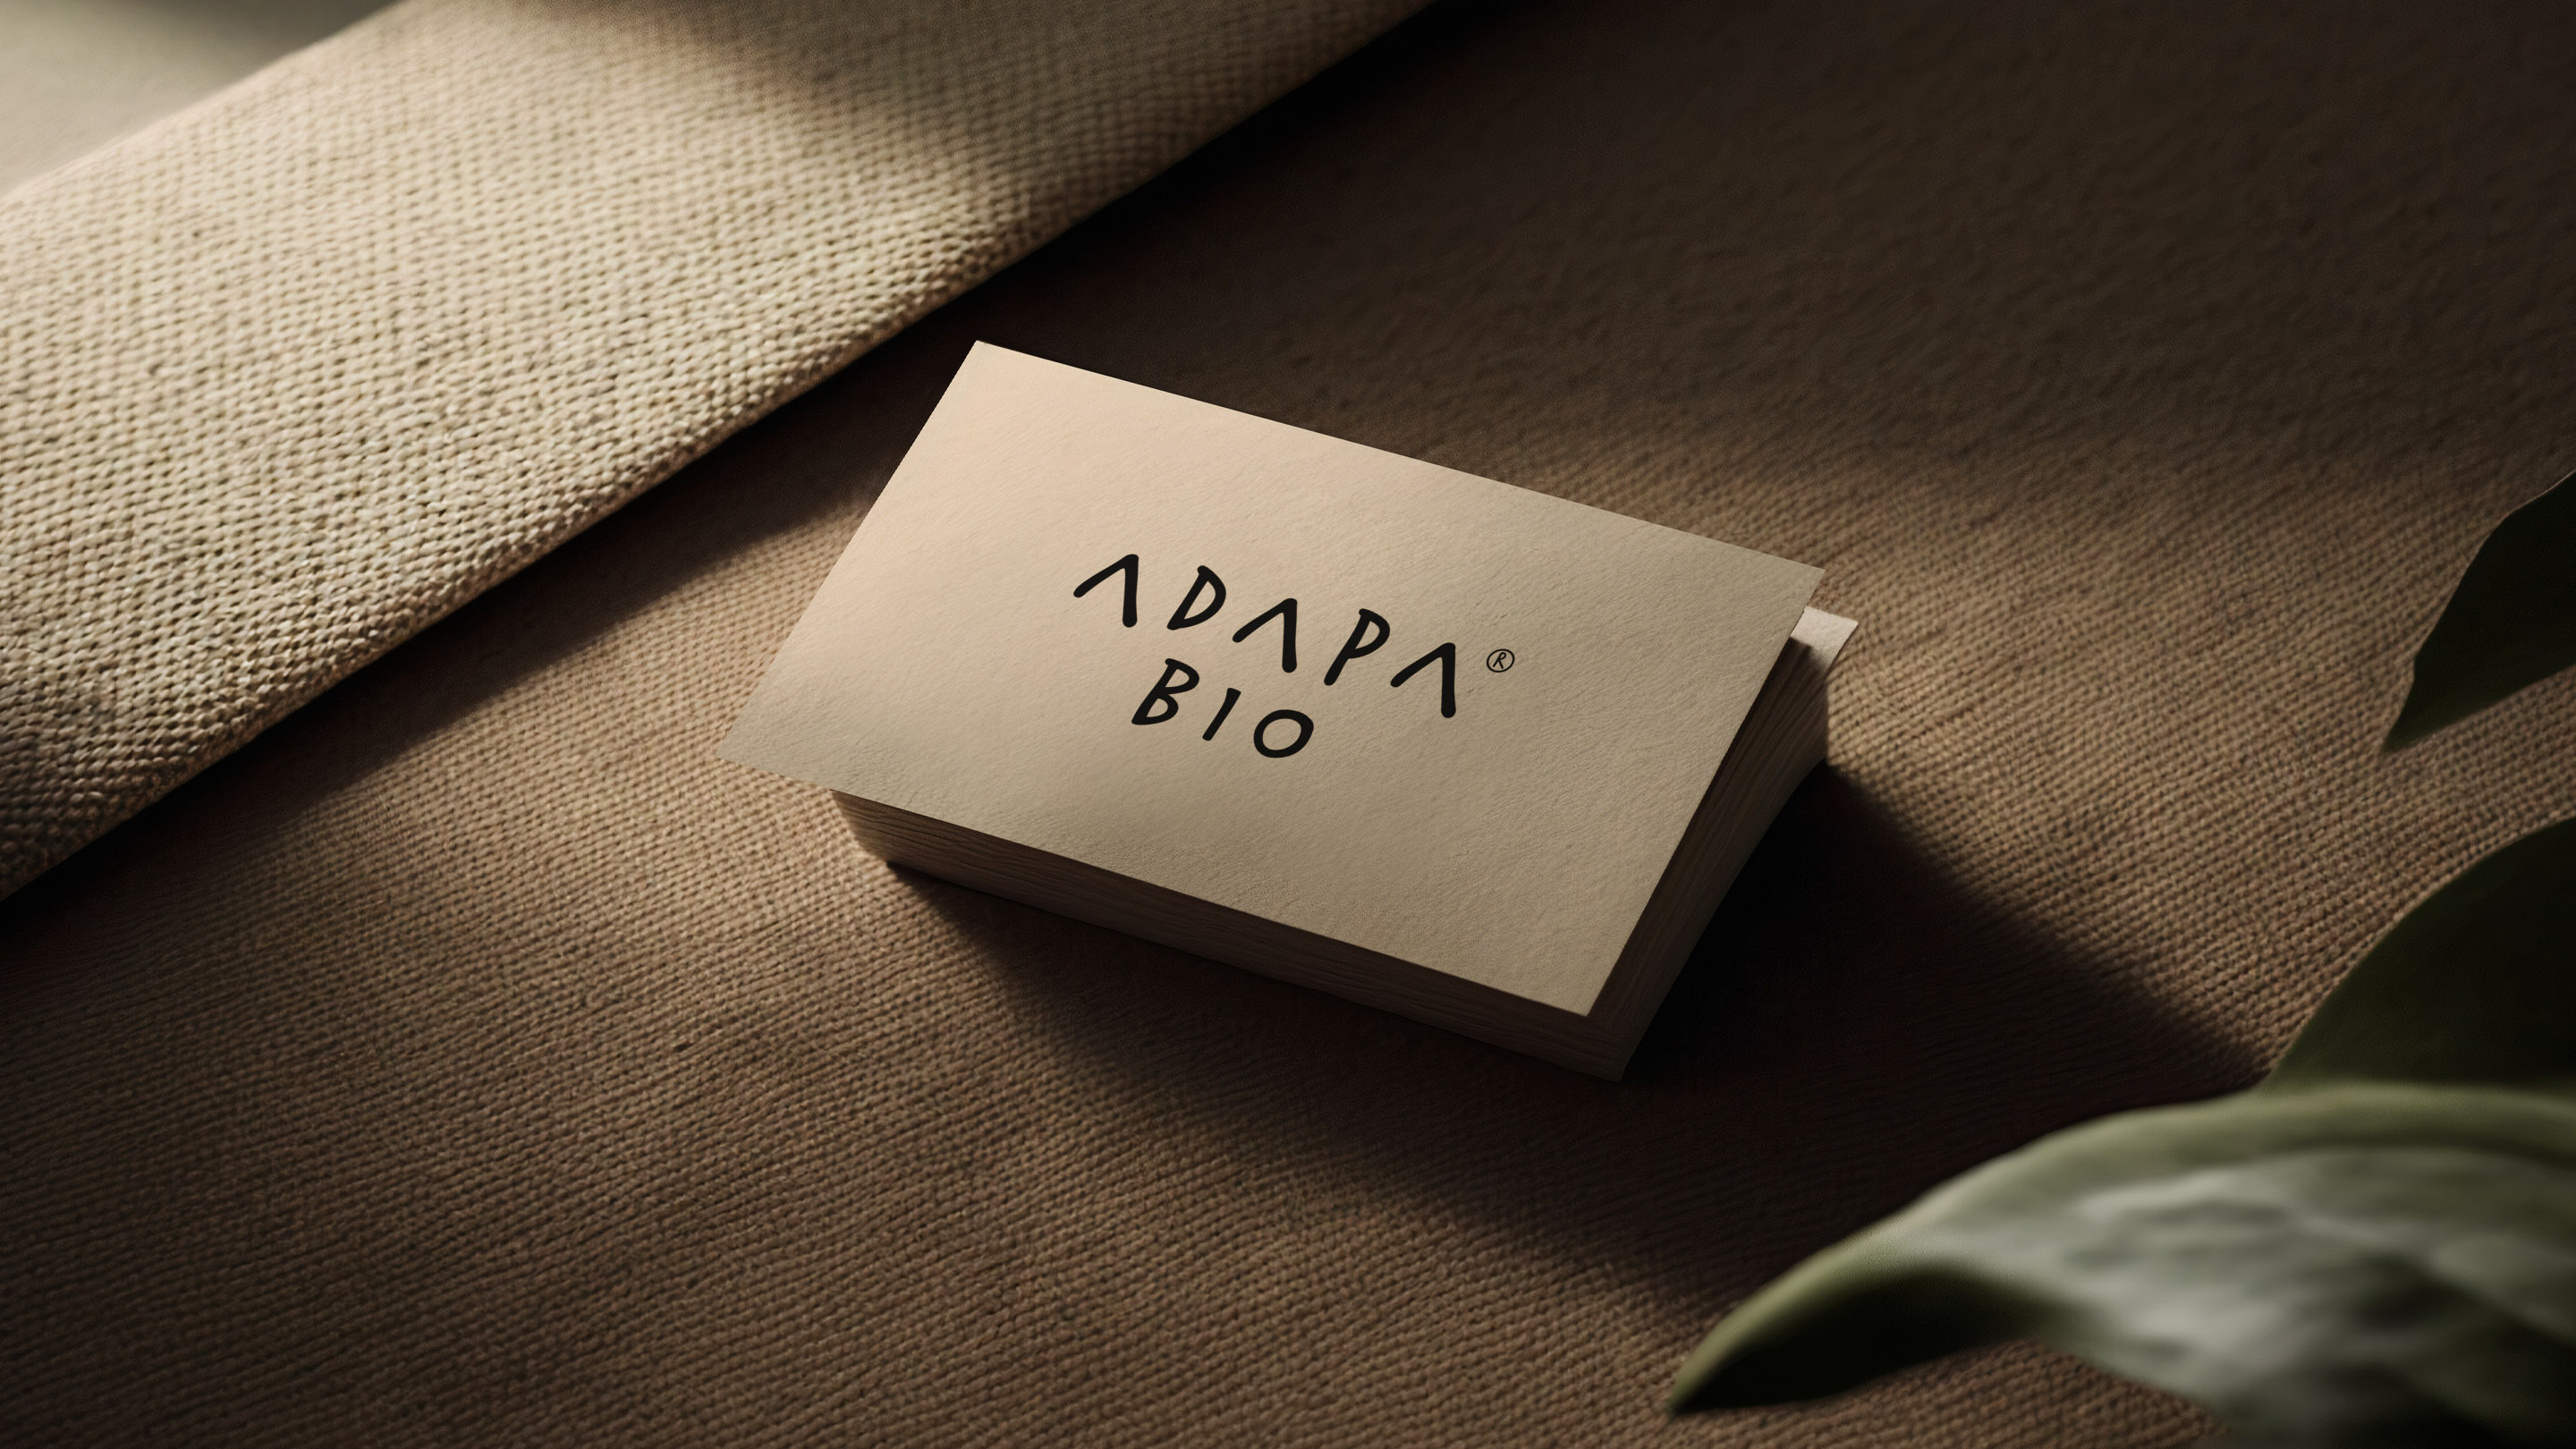 Adapa Bio Brand Identity by Azteca Studio